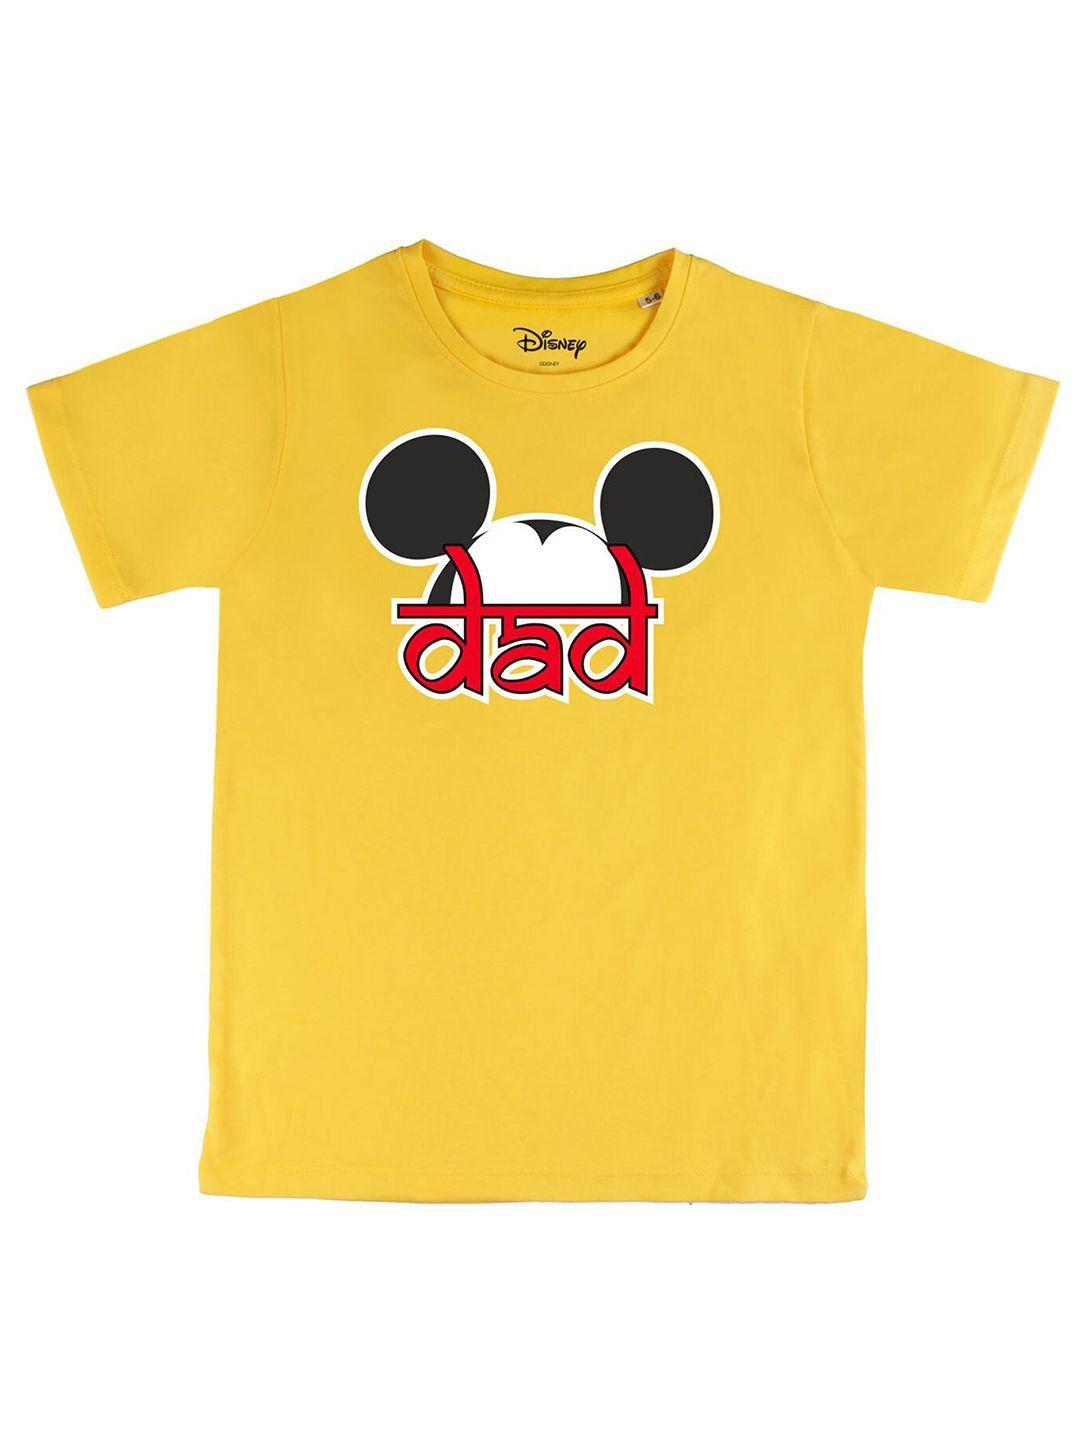 disney by wear your mind boys yellow disney printed t-shirt